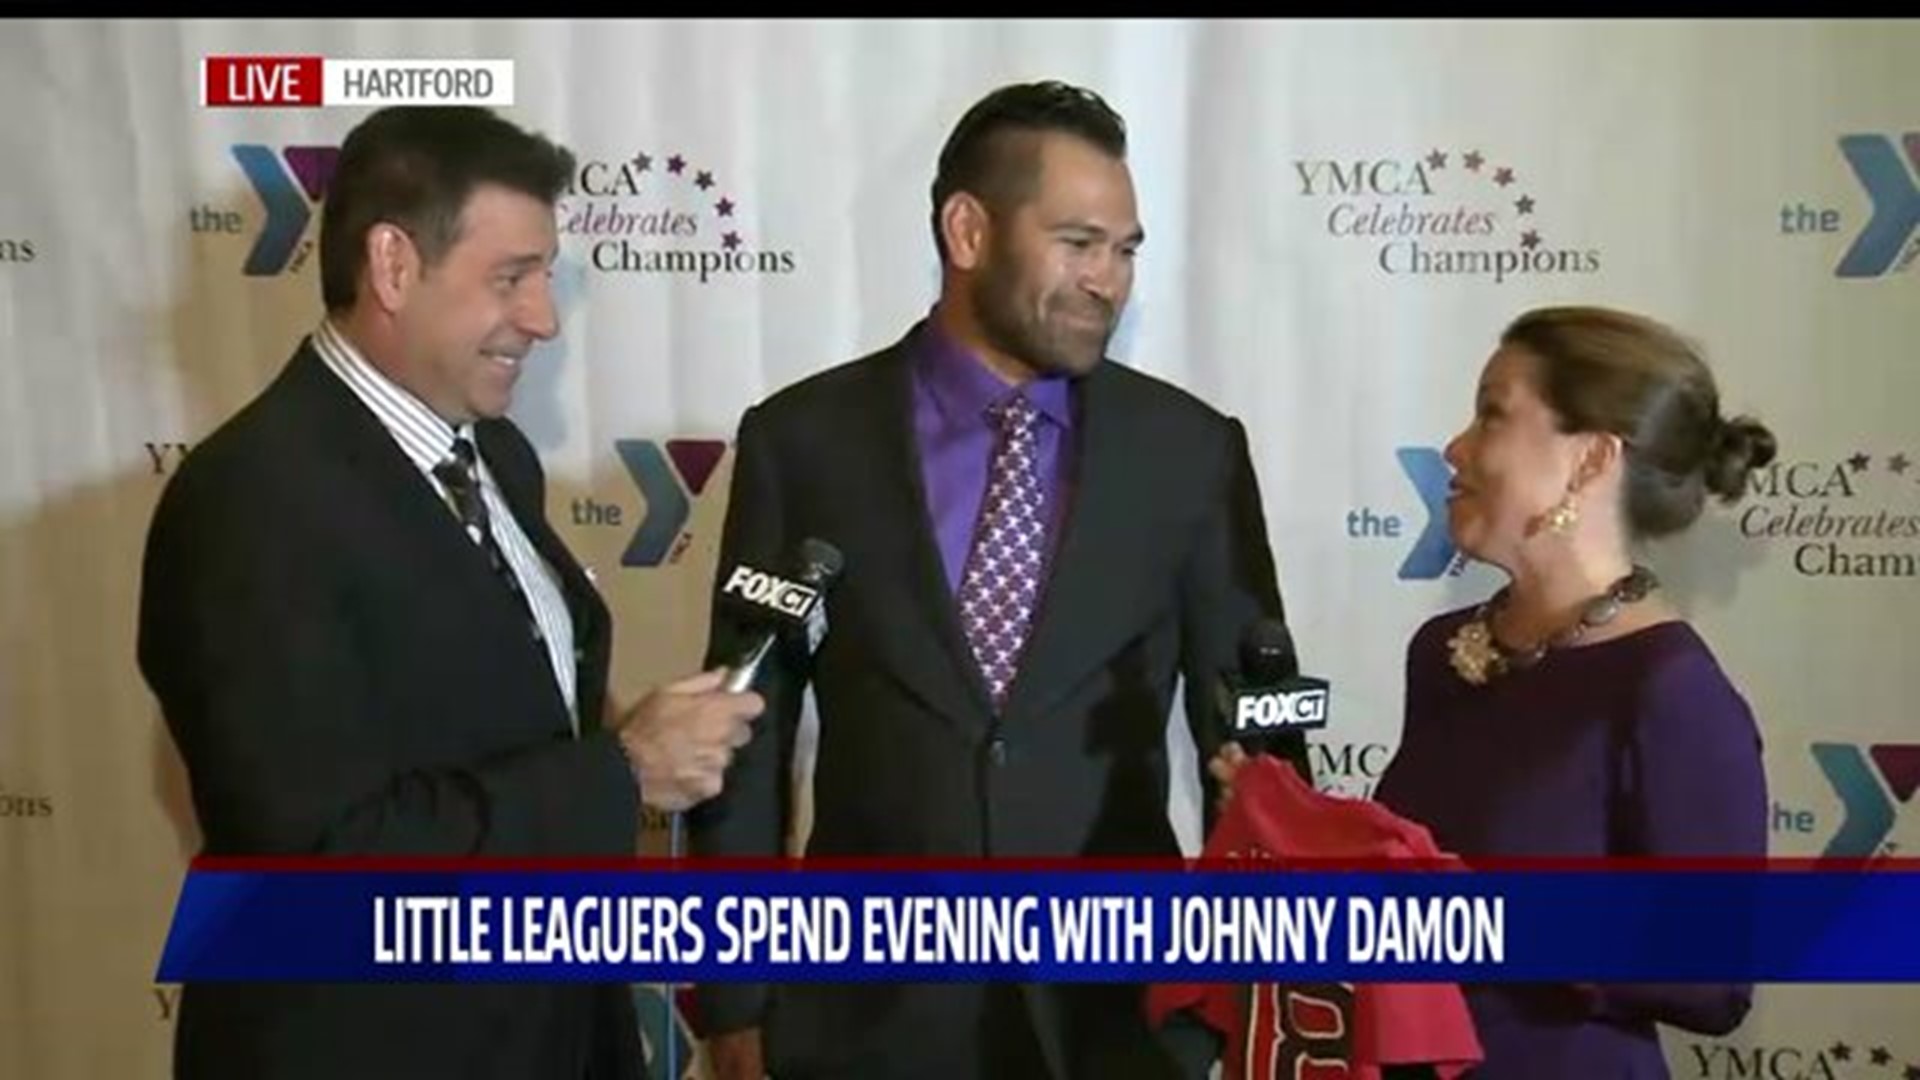 Johnny Damon at the YMCA Celebrates Champions Event